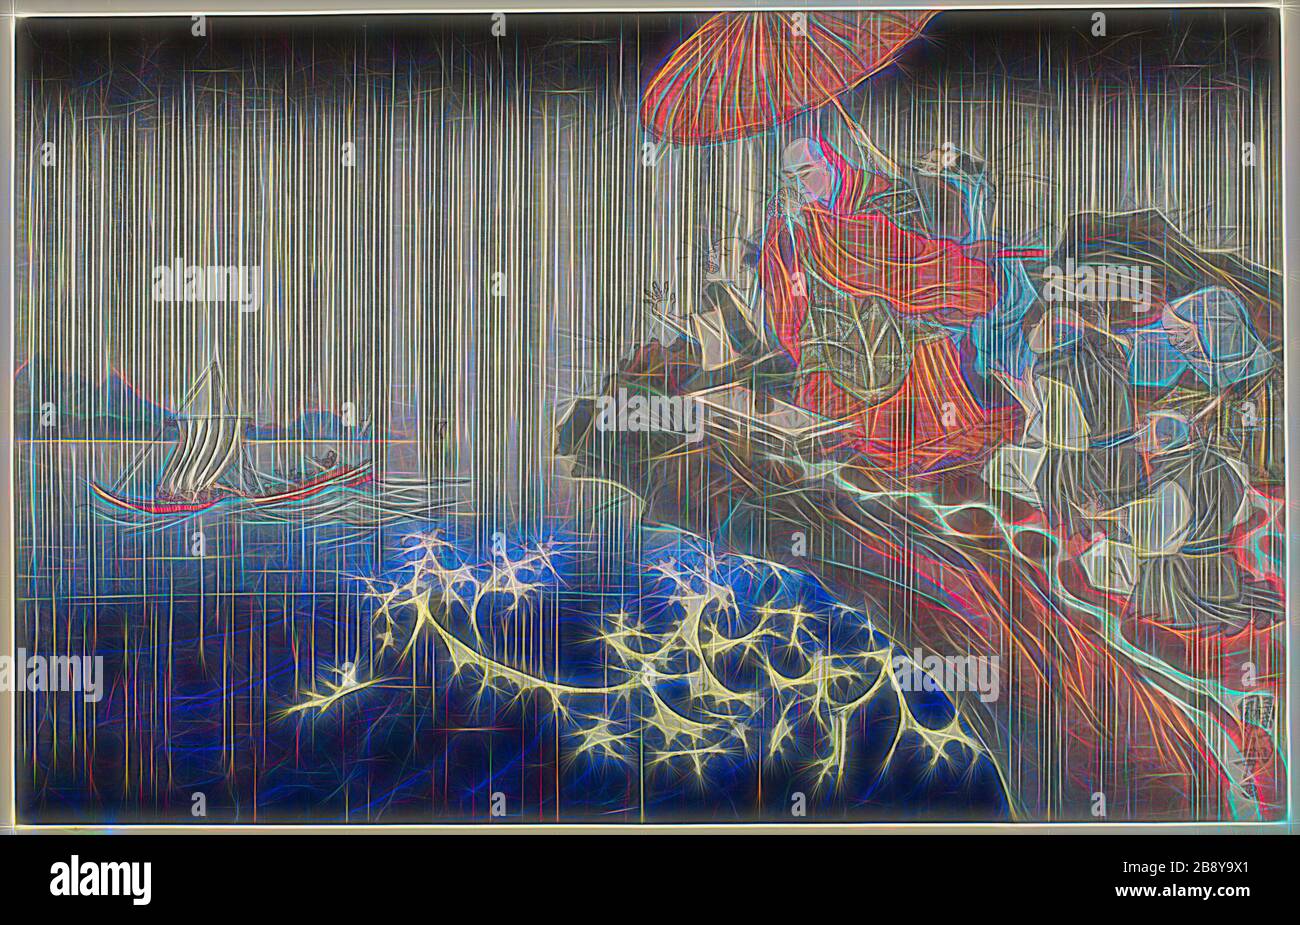 Praying for Rain at Ryozengasaki in Kamakura, 1271 (Bun’ei hachi Kamakura Ryozengasaki ame inoru), from the series Concise Illustrated Biography of the Great Priest [Nichiren] (Koso go ichidai ryakuzu), c. 1830/35, Utagawa Kuniyoshi, Japanese, 1797-1861, Japan, Color woodblock print, oban, 21.7 x 34.1 cm (8 9/16 x 13 7/16 in.), Reimagined by Gibon, design of warm cheerful glowing of brightness and light rays radiance. Classic art reinvented with a modern twist. Photography inspired by futurism, embracing dynamic energy of modern technology, movement, speed and revolutionize culture. Stock Photo